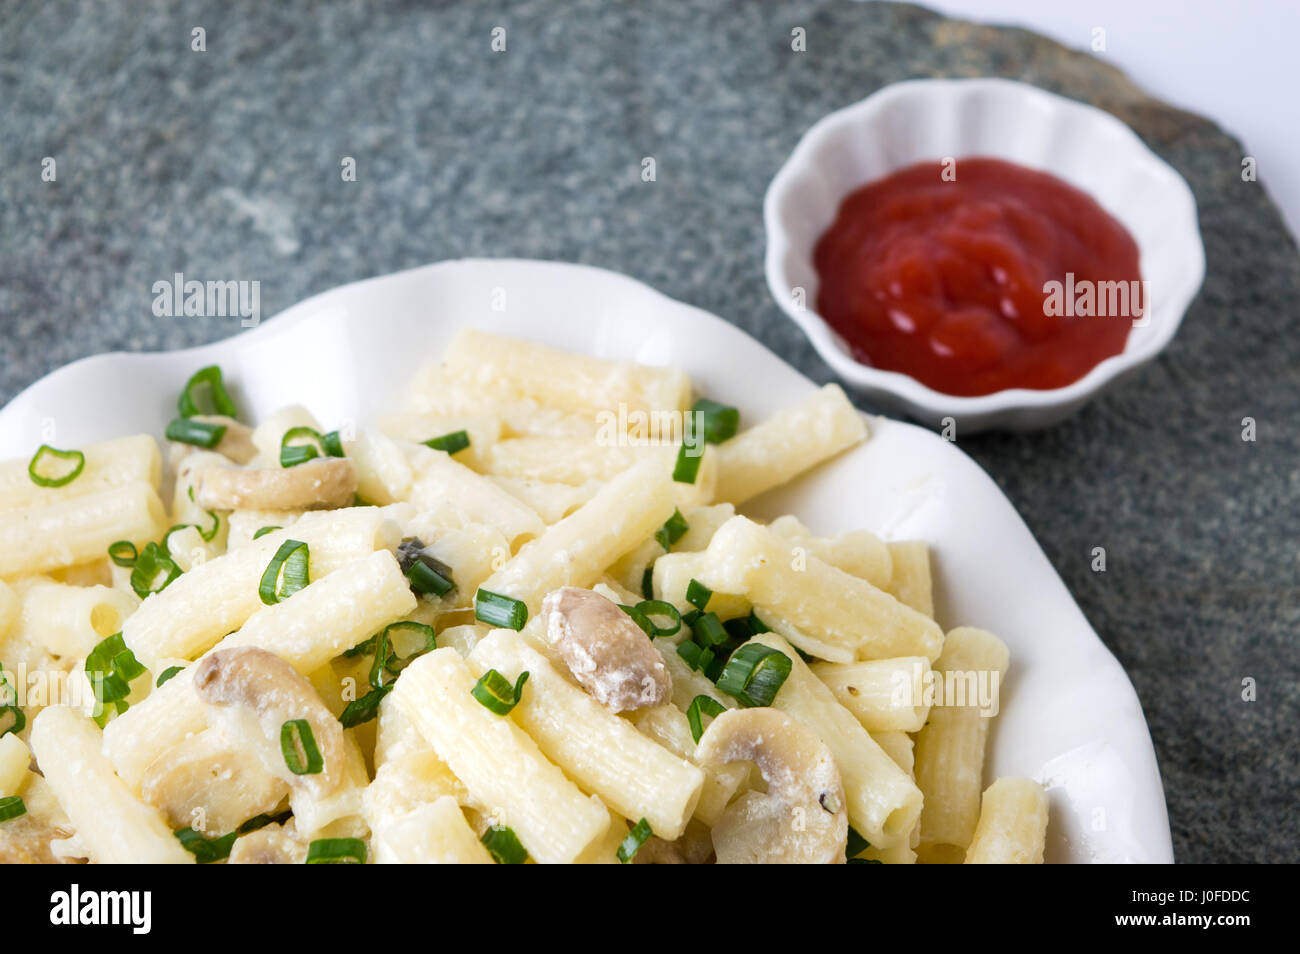 Macaroni pasta with onion sliced rolls and tomato sauce Stock Photo